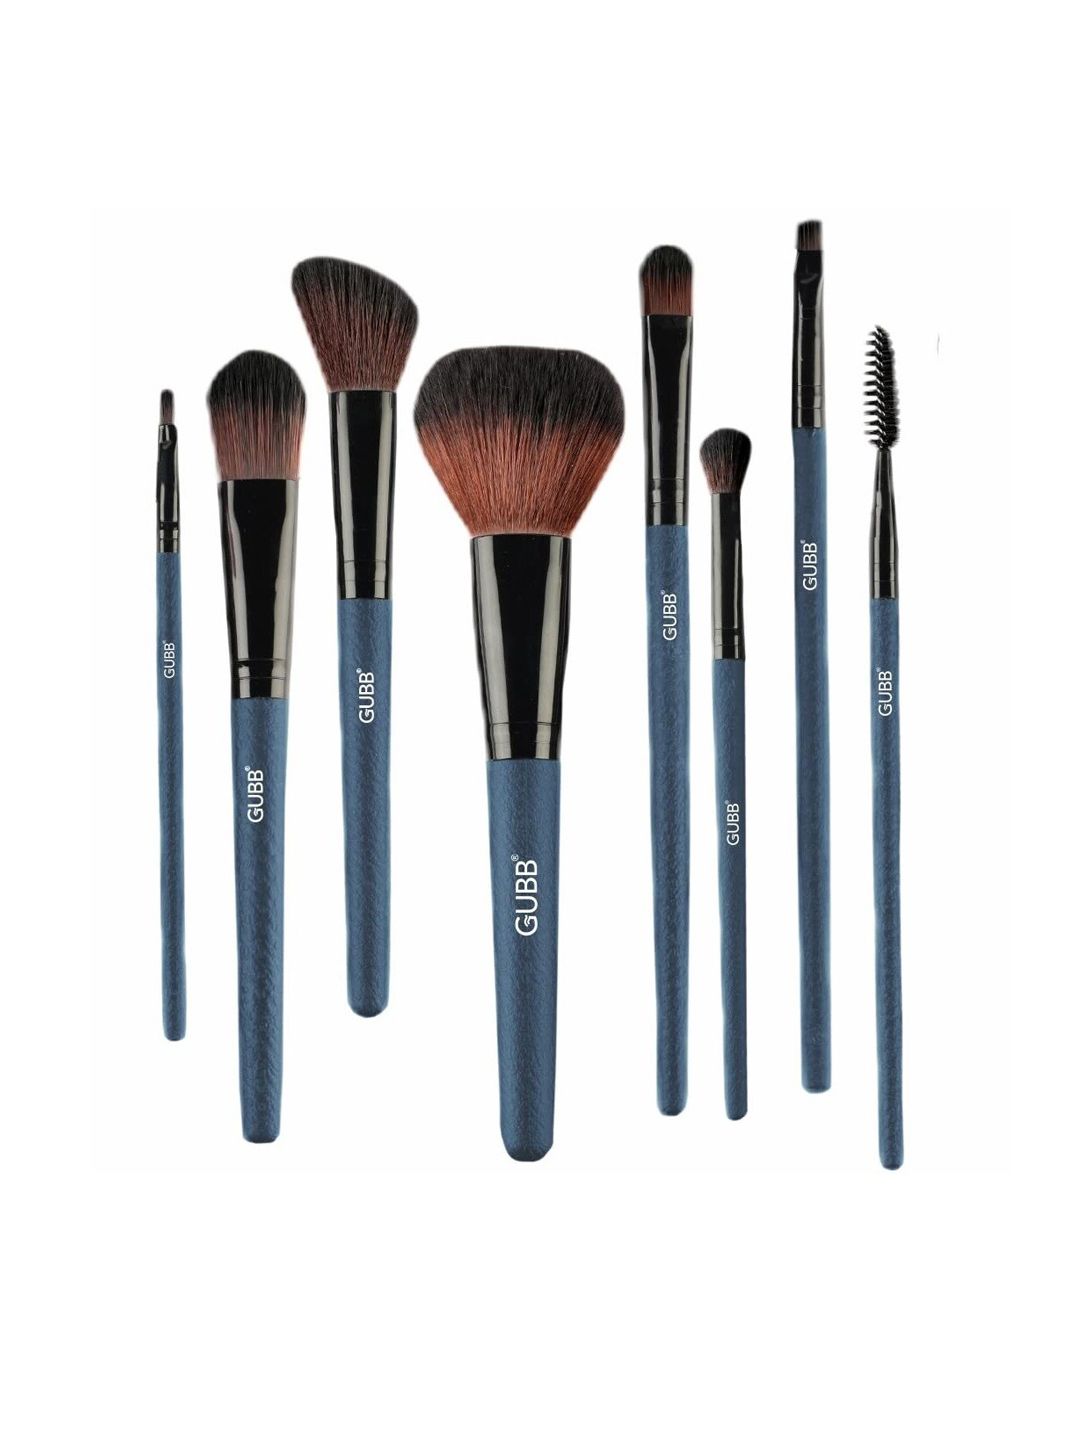 GUBB Set of 8 Makeup Brushes - Black Price in India